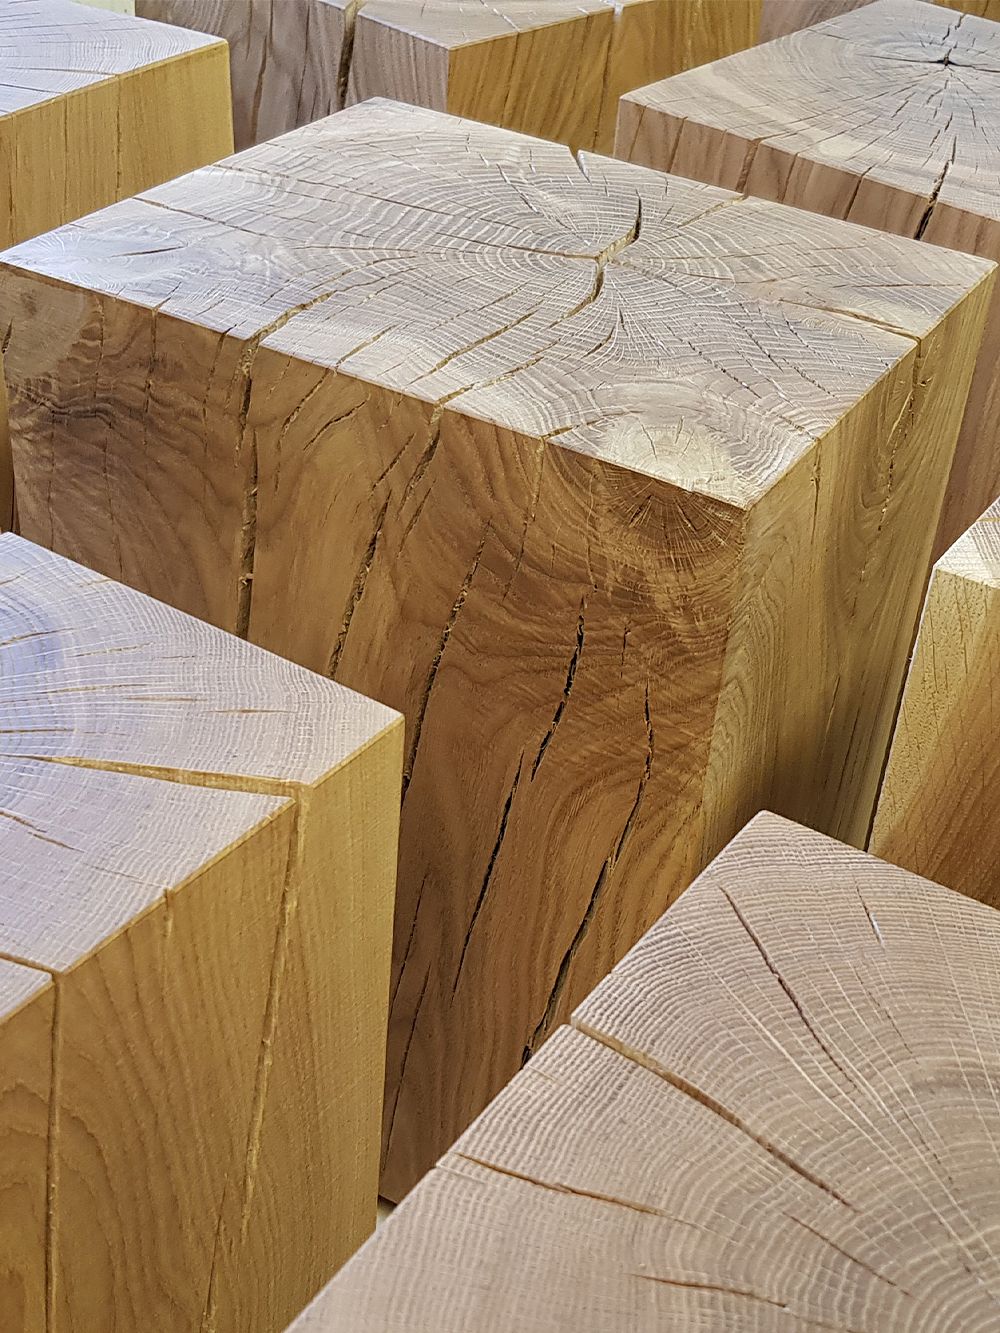 Wood logs that will become Nikari Biennale stools